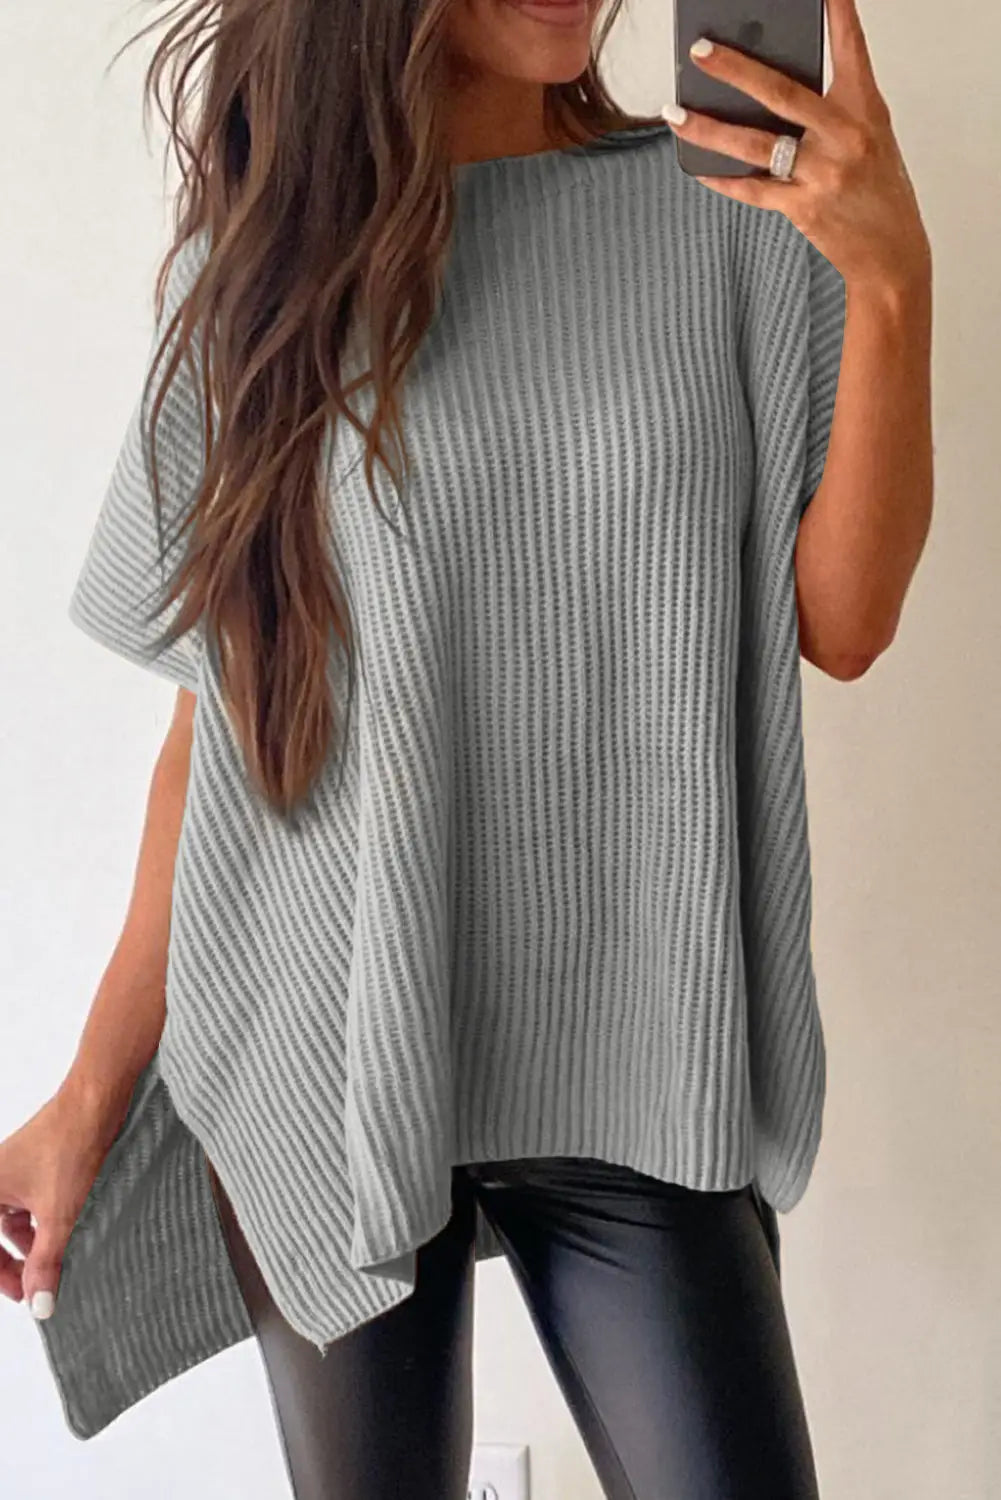 Gray asymmetric oversized sweater - s / 55% acrylic + 45% cotton - tops